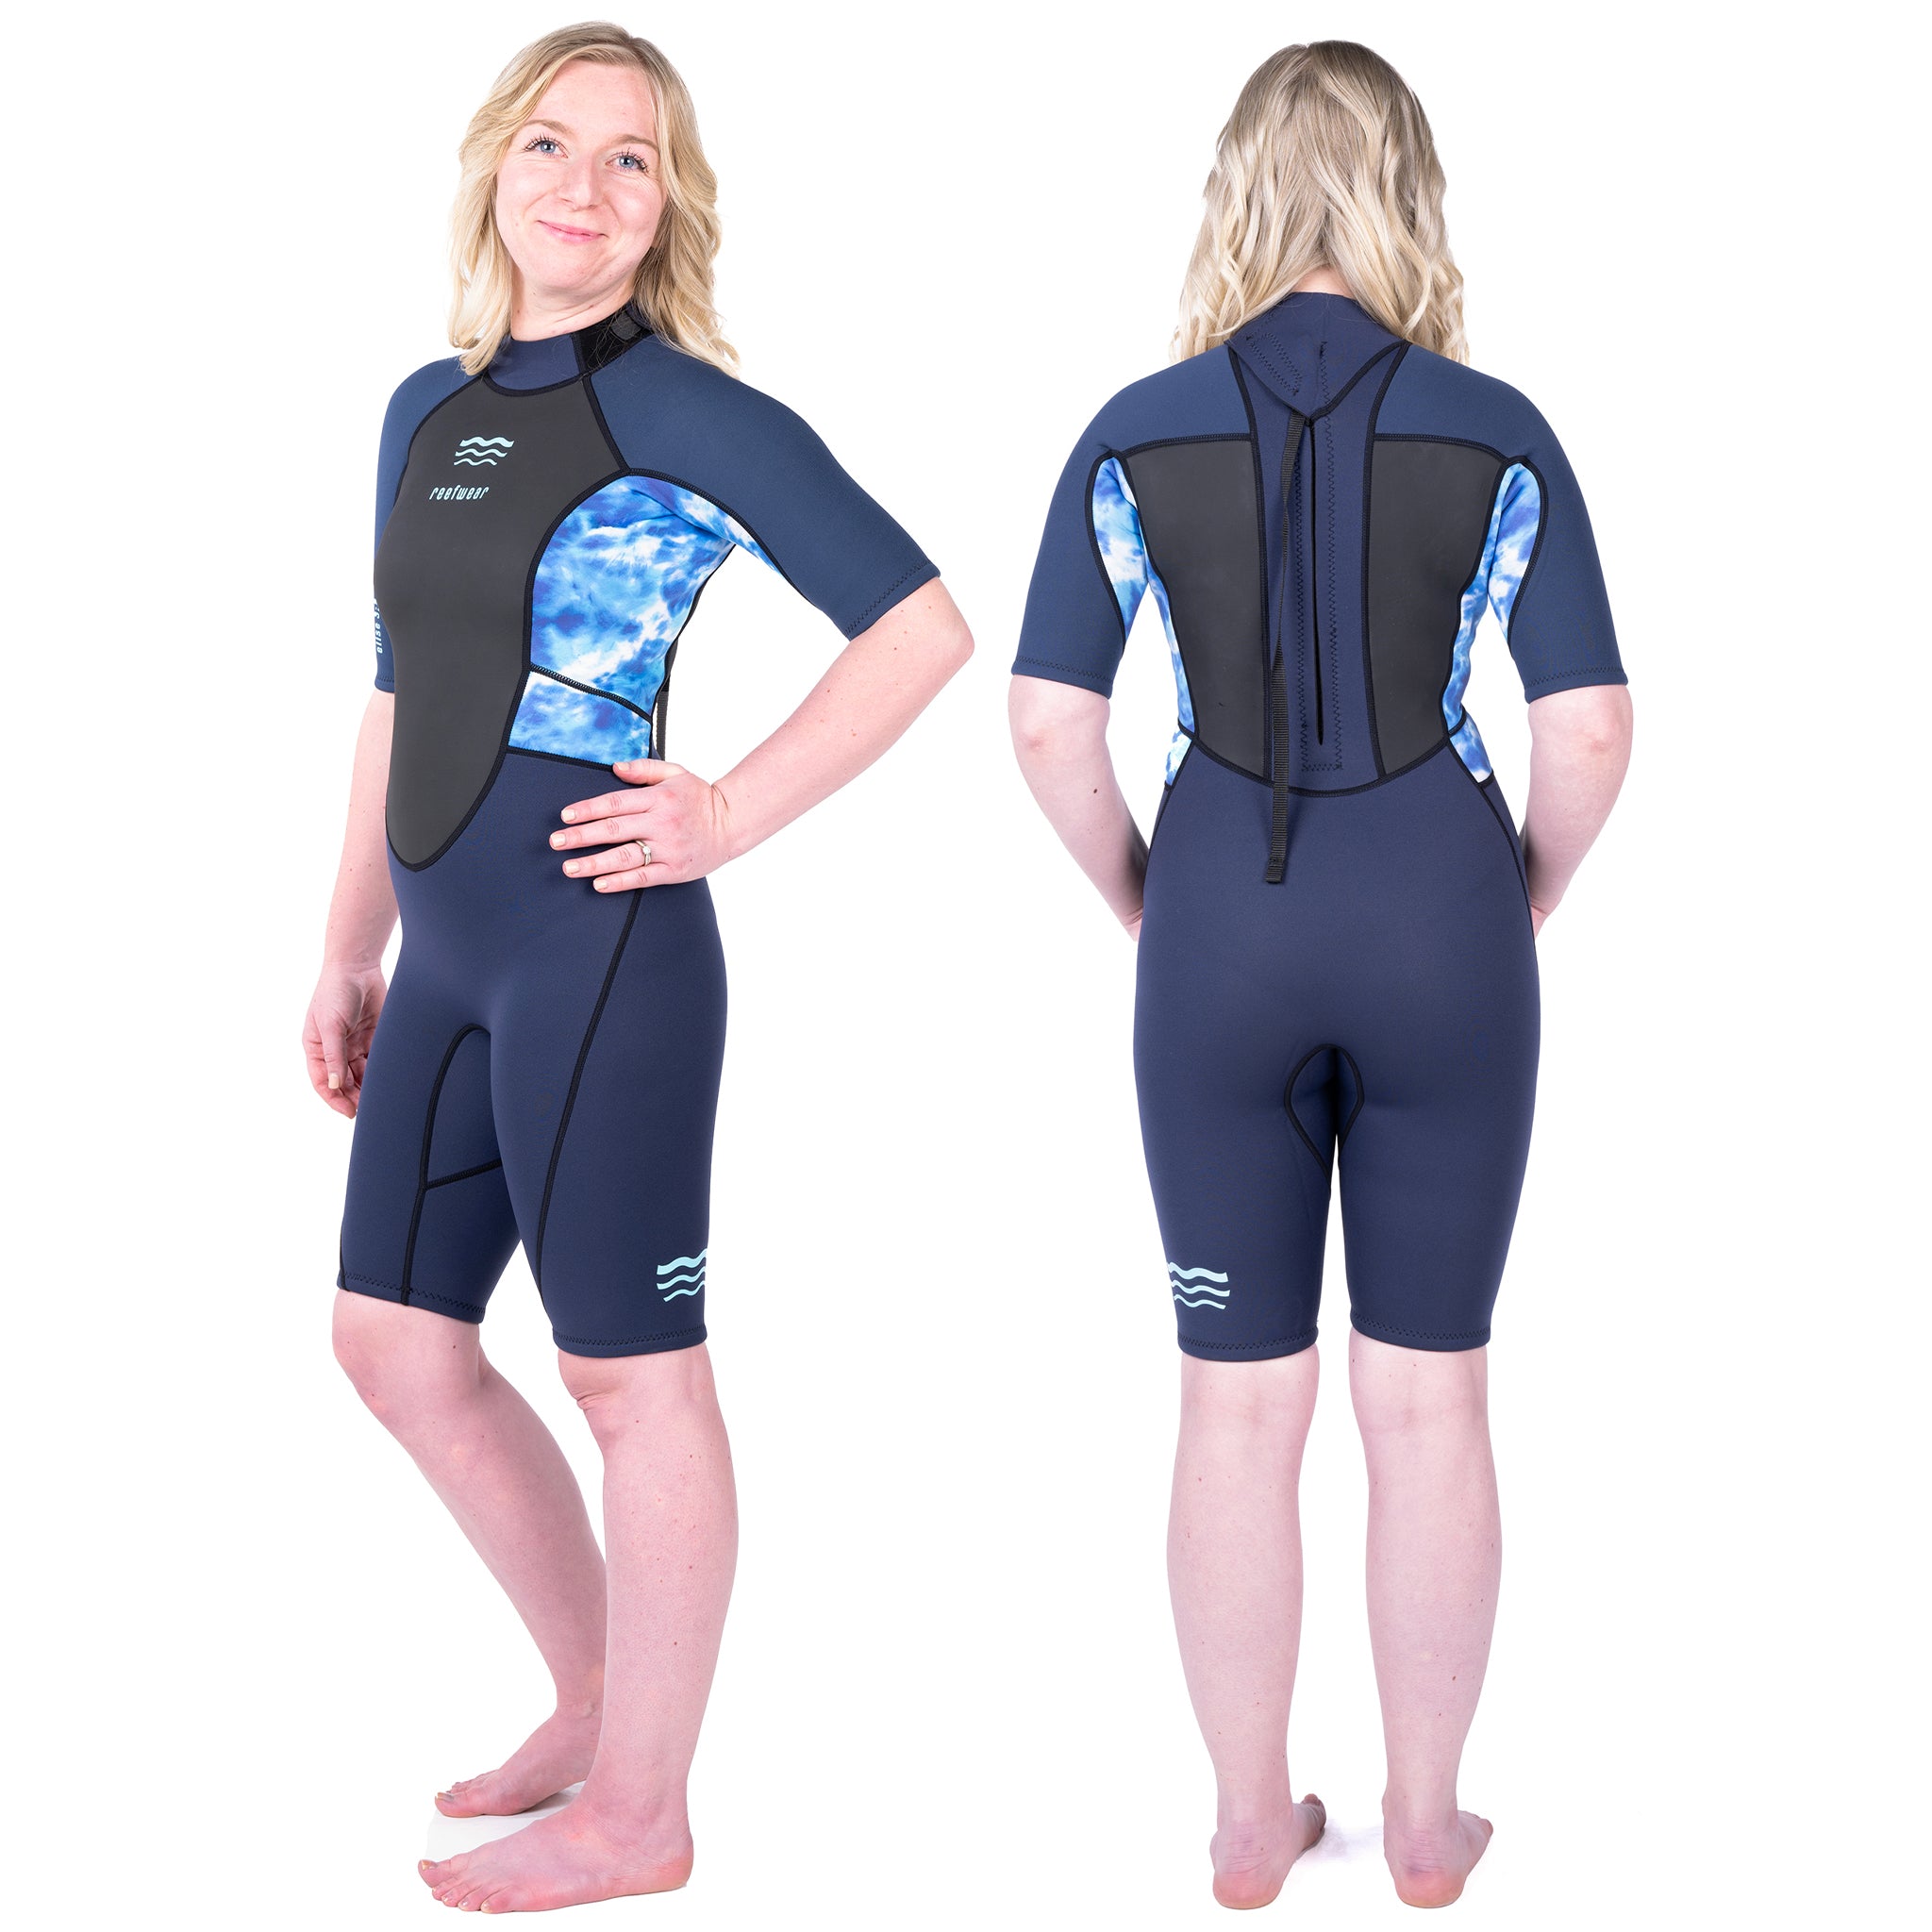 Reefwear Elise 3/2mm Women's Shortie Wetsuit | Torso side patterned panle and back view